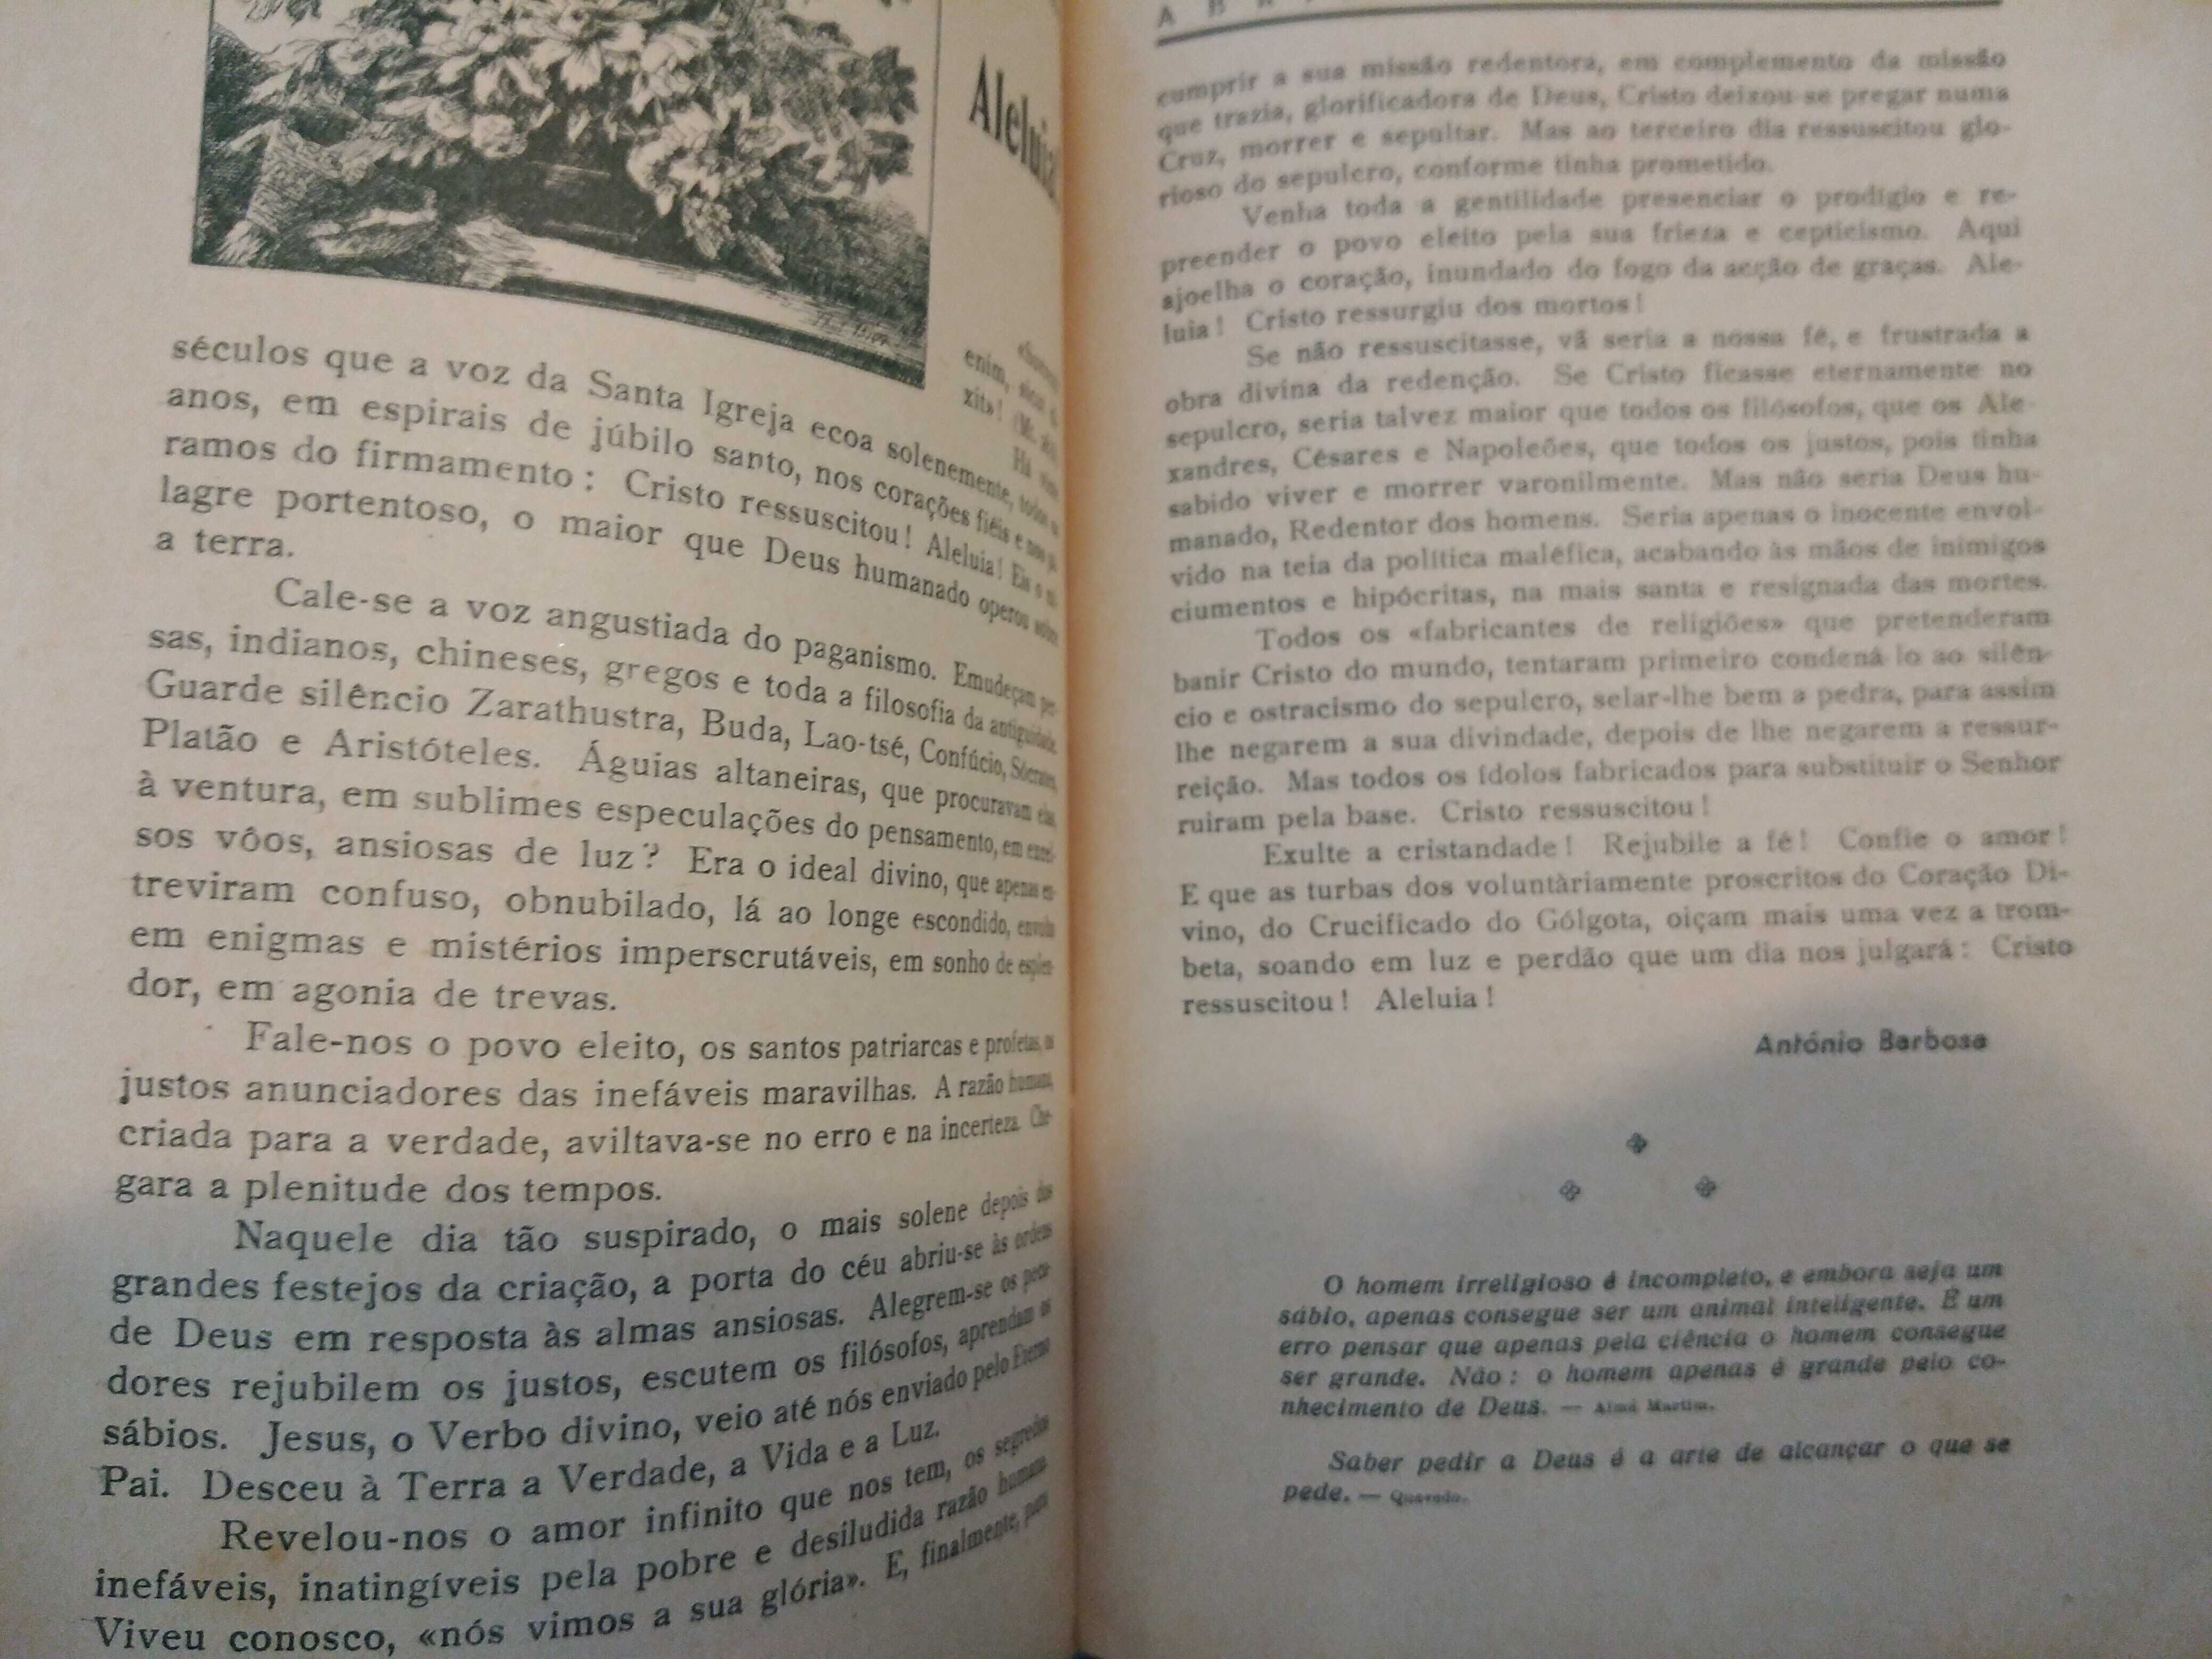 Almanaque de Santo António [1950]